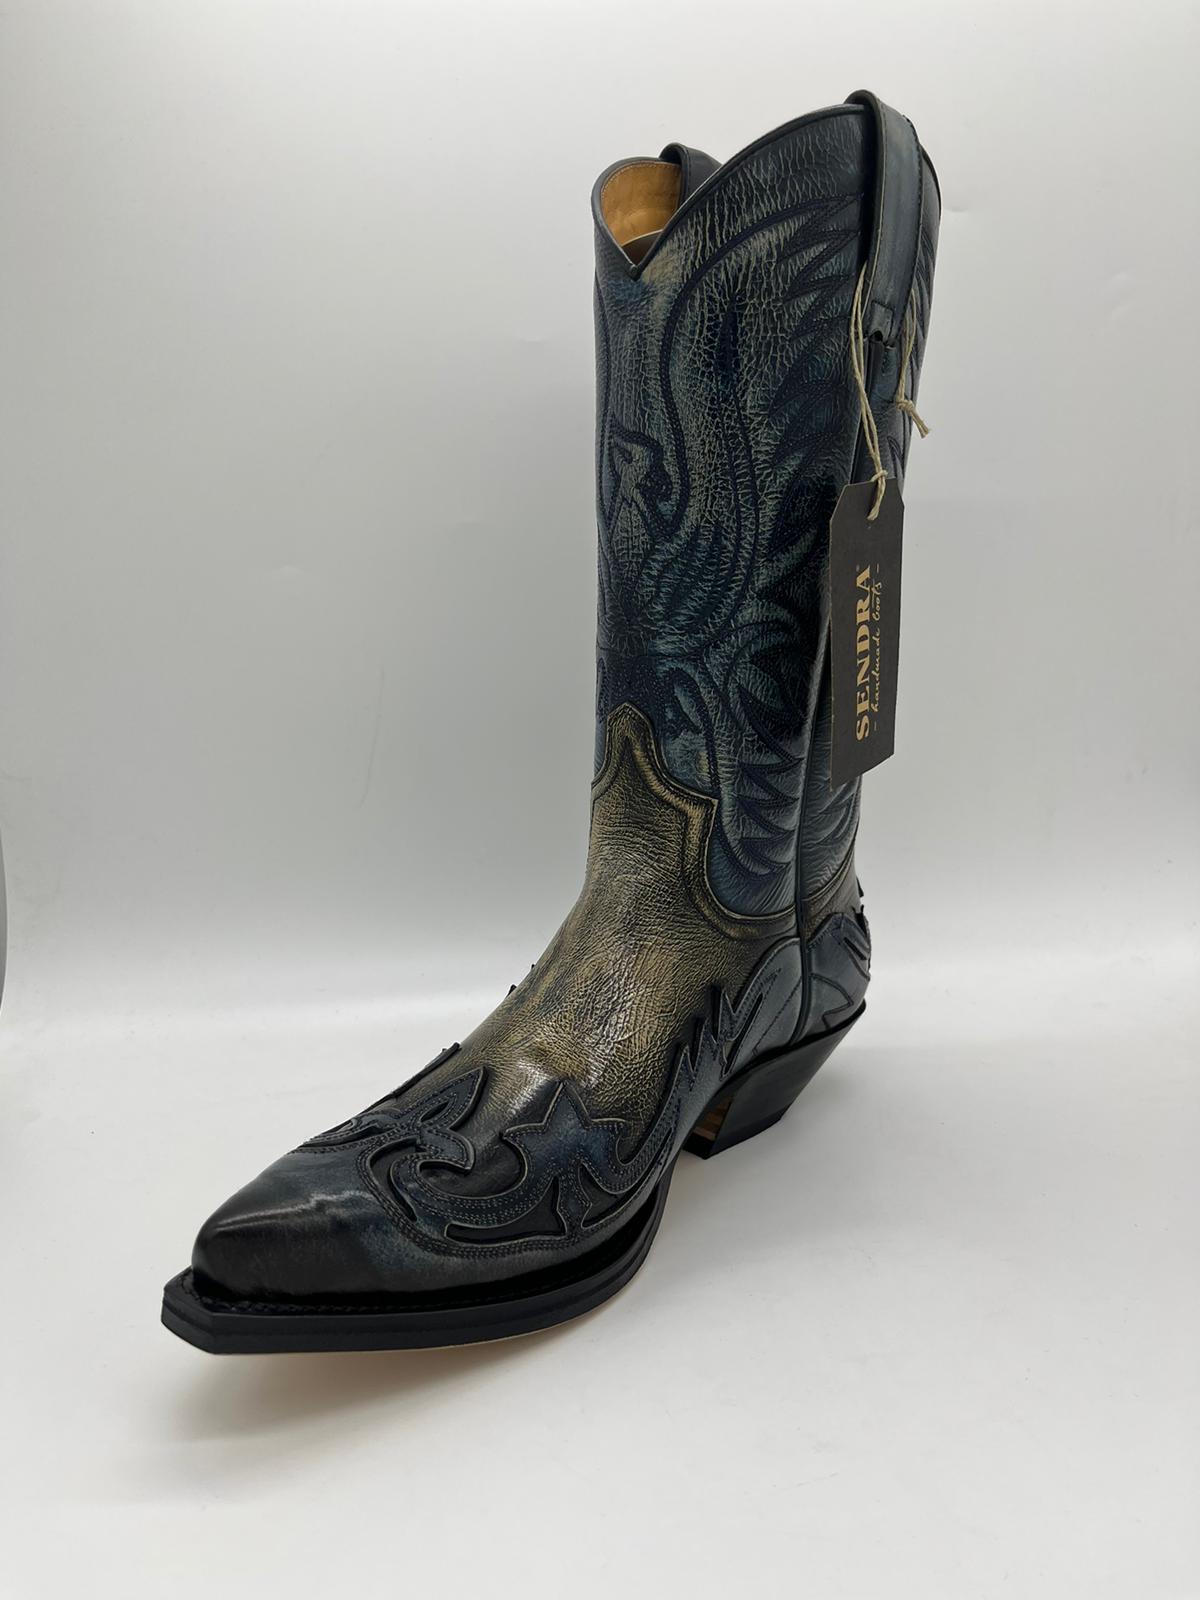 Sendra Boots Western Cowboy Boots Biker Boots 3241 Denver Azul Dirty Hueso